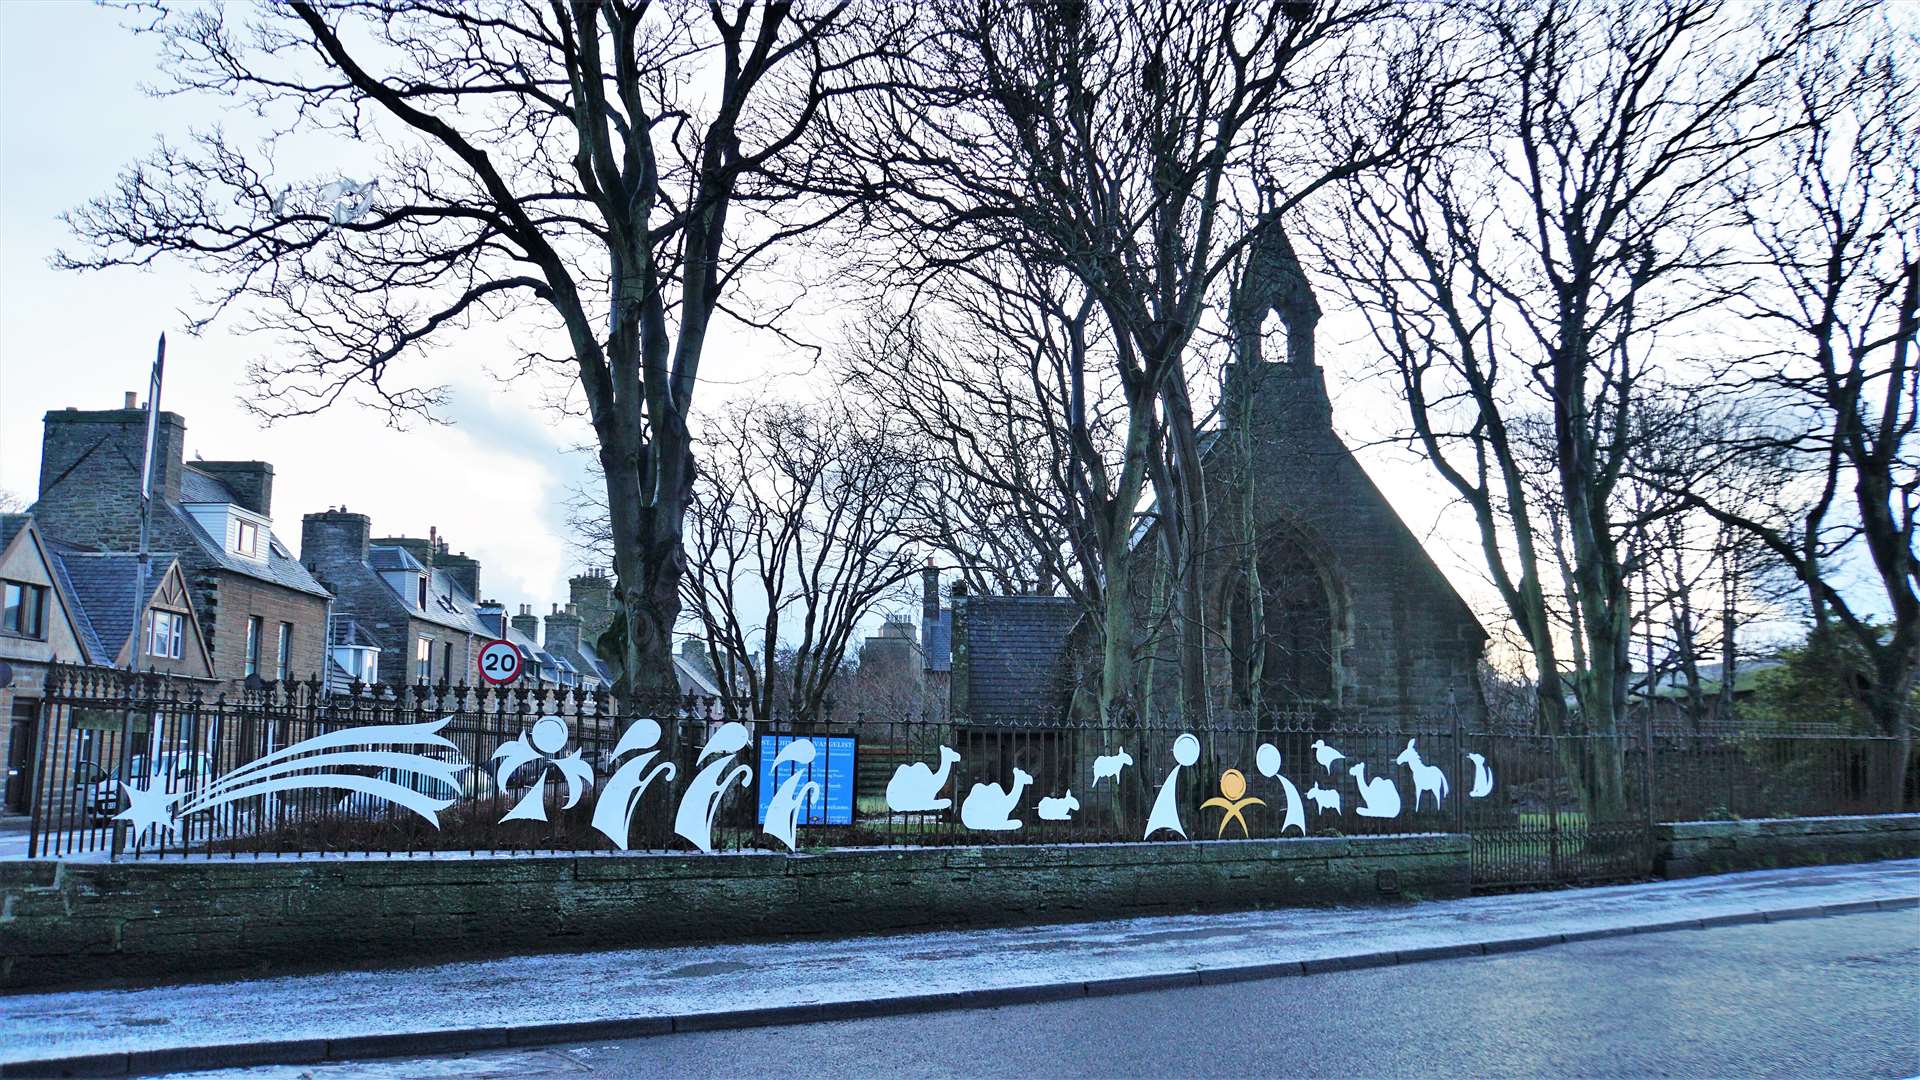 The nativity scene outside St John's Church in Wick.